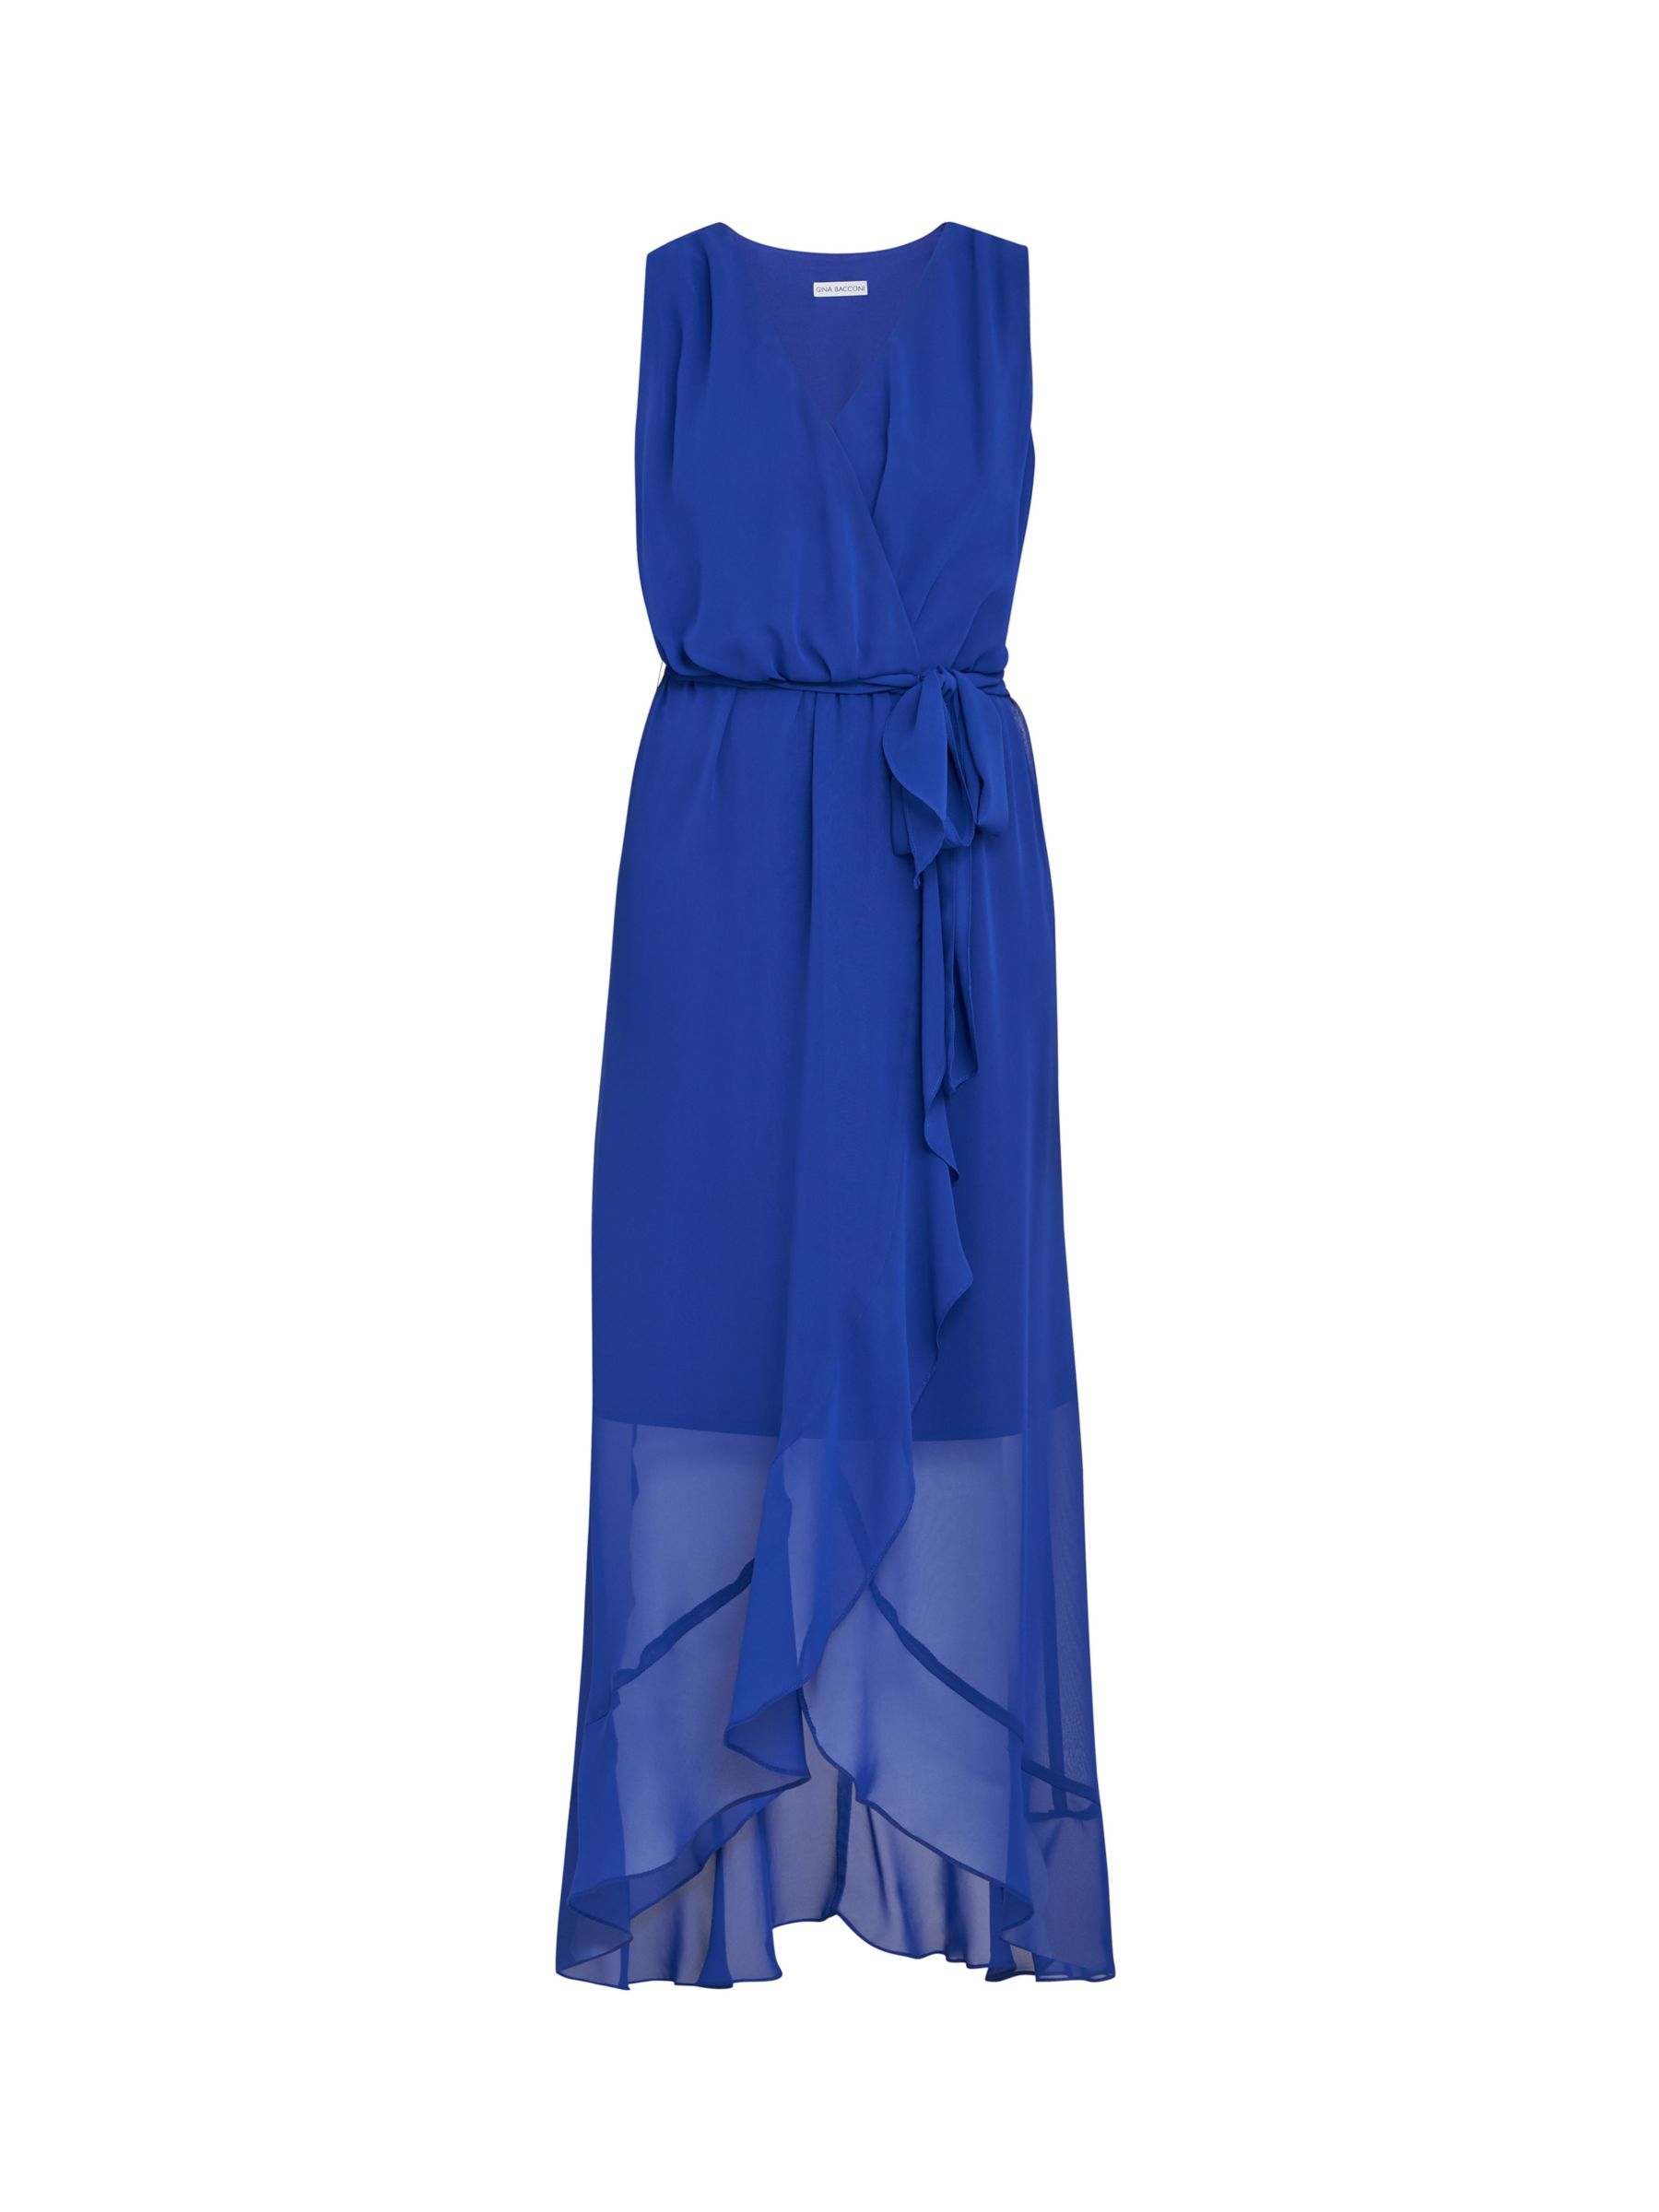 Gina Bacconi Imogen Wrap Maxi Dress, Royal Blue at John Lewis & Partners